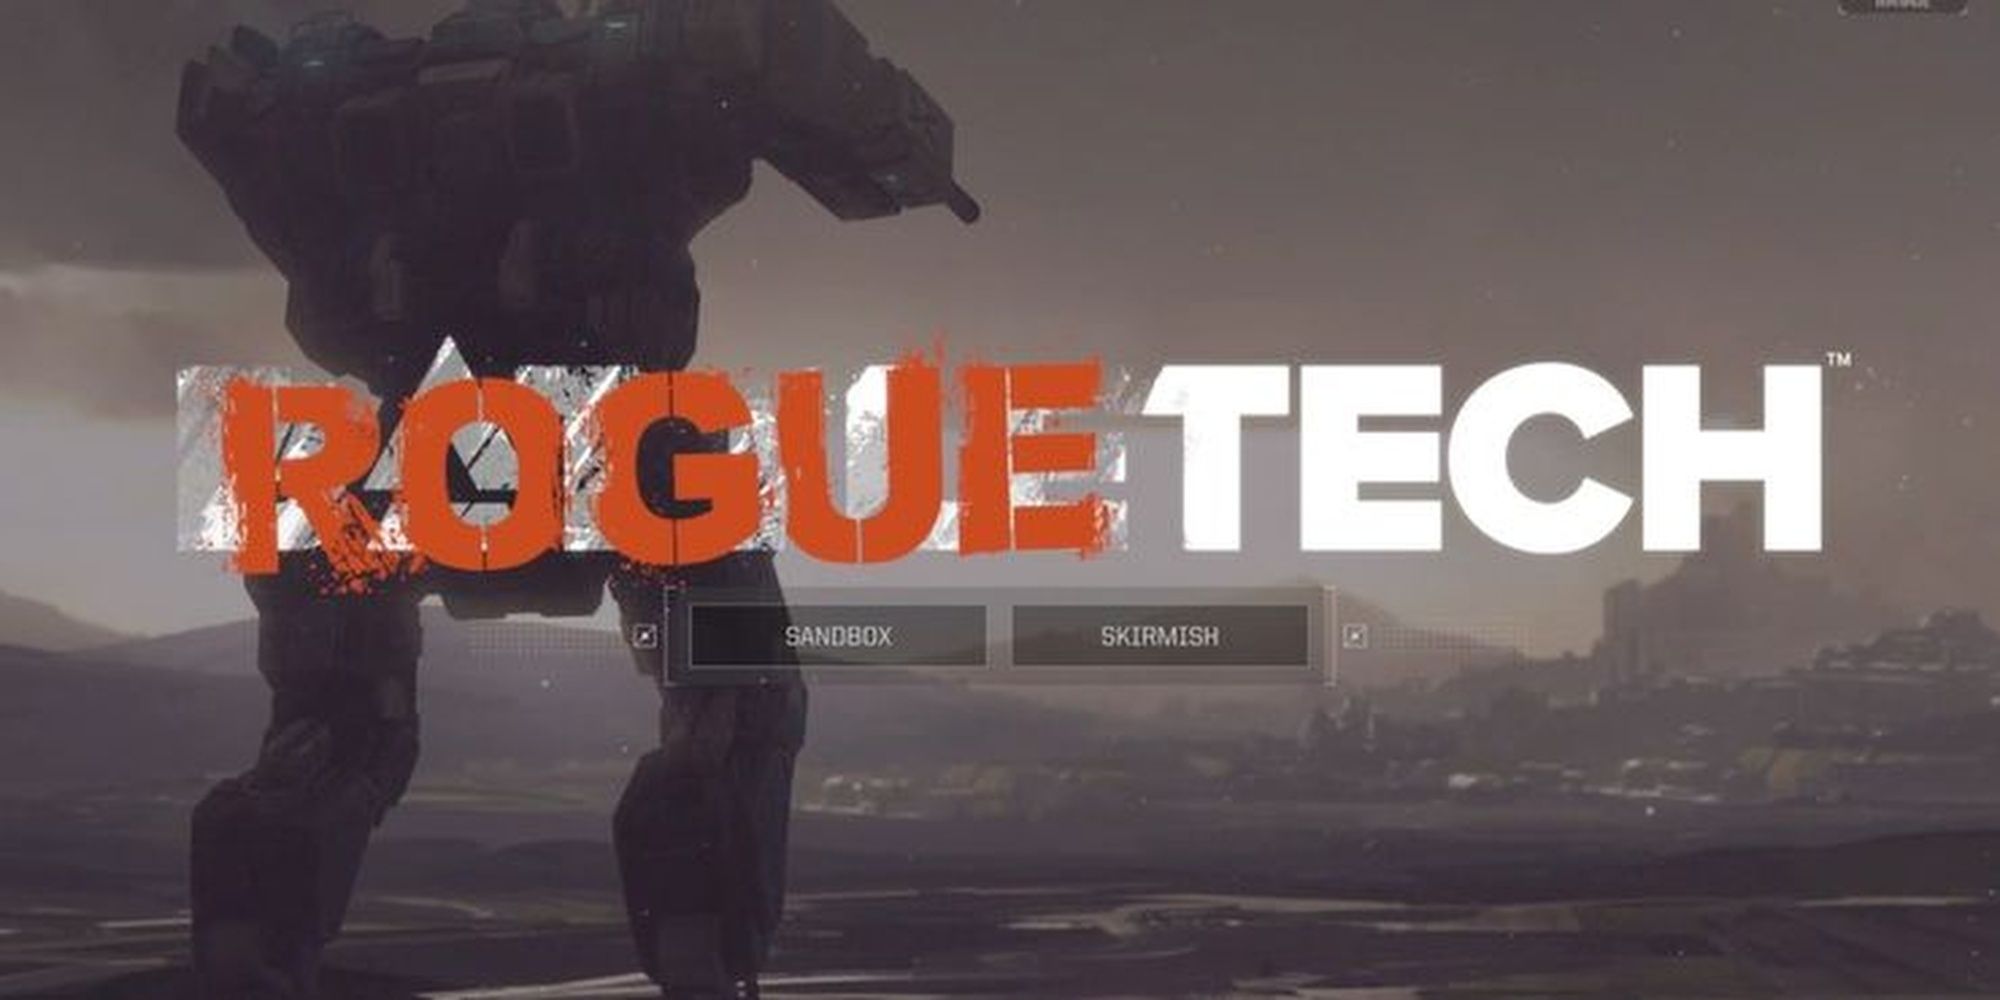 Roguetech-Mod-Cropped BattleTech Mod